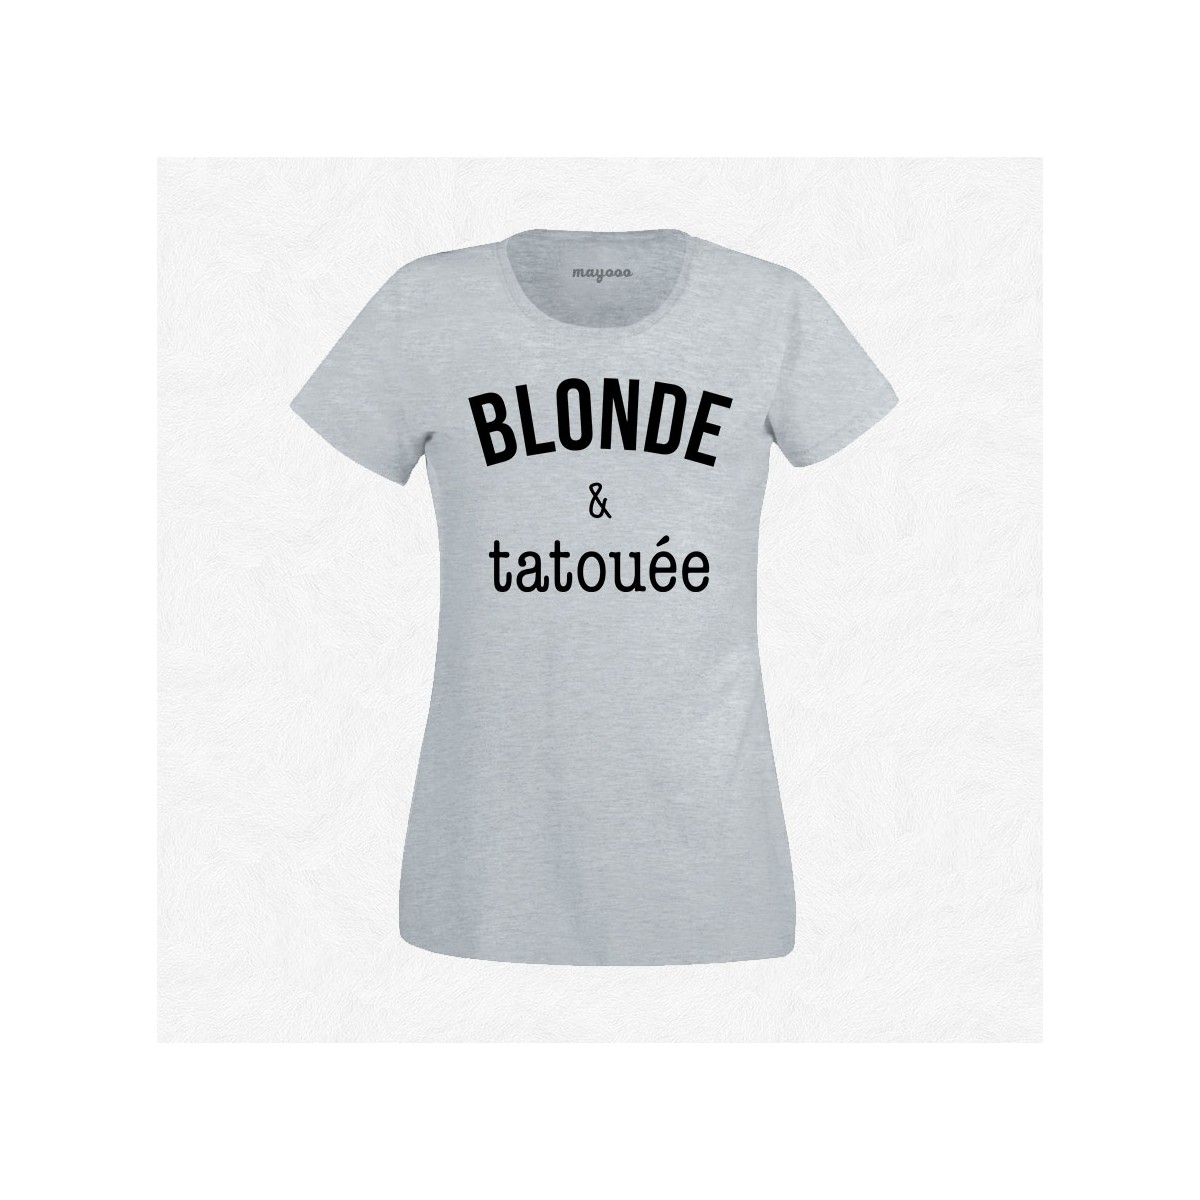 T-shirt Blonde & tatouée